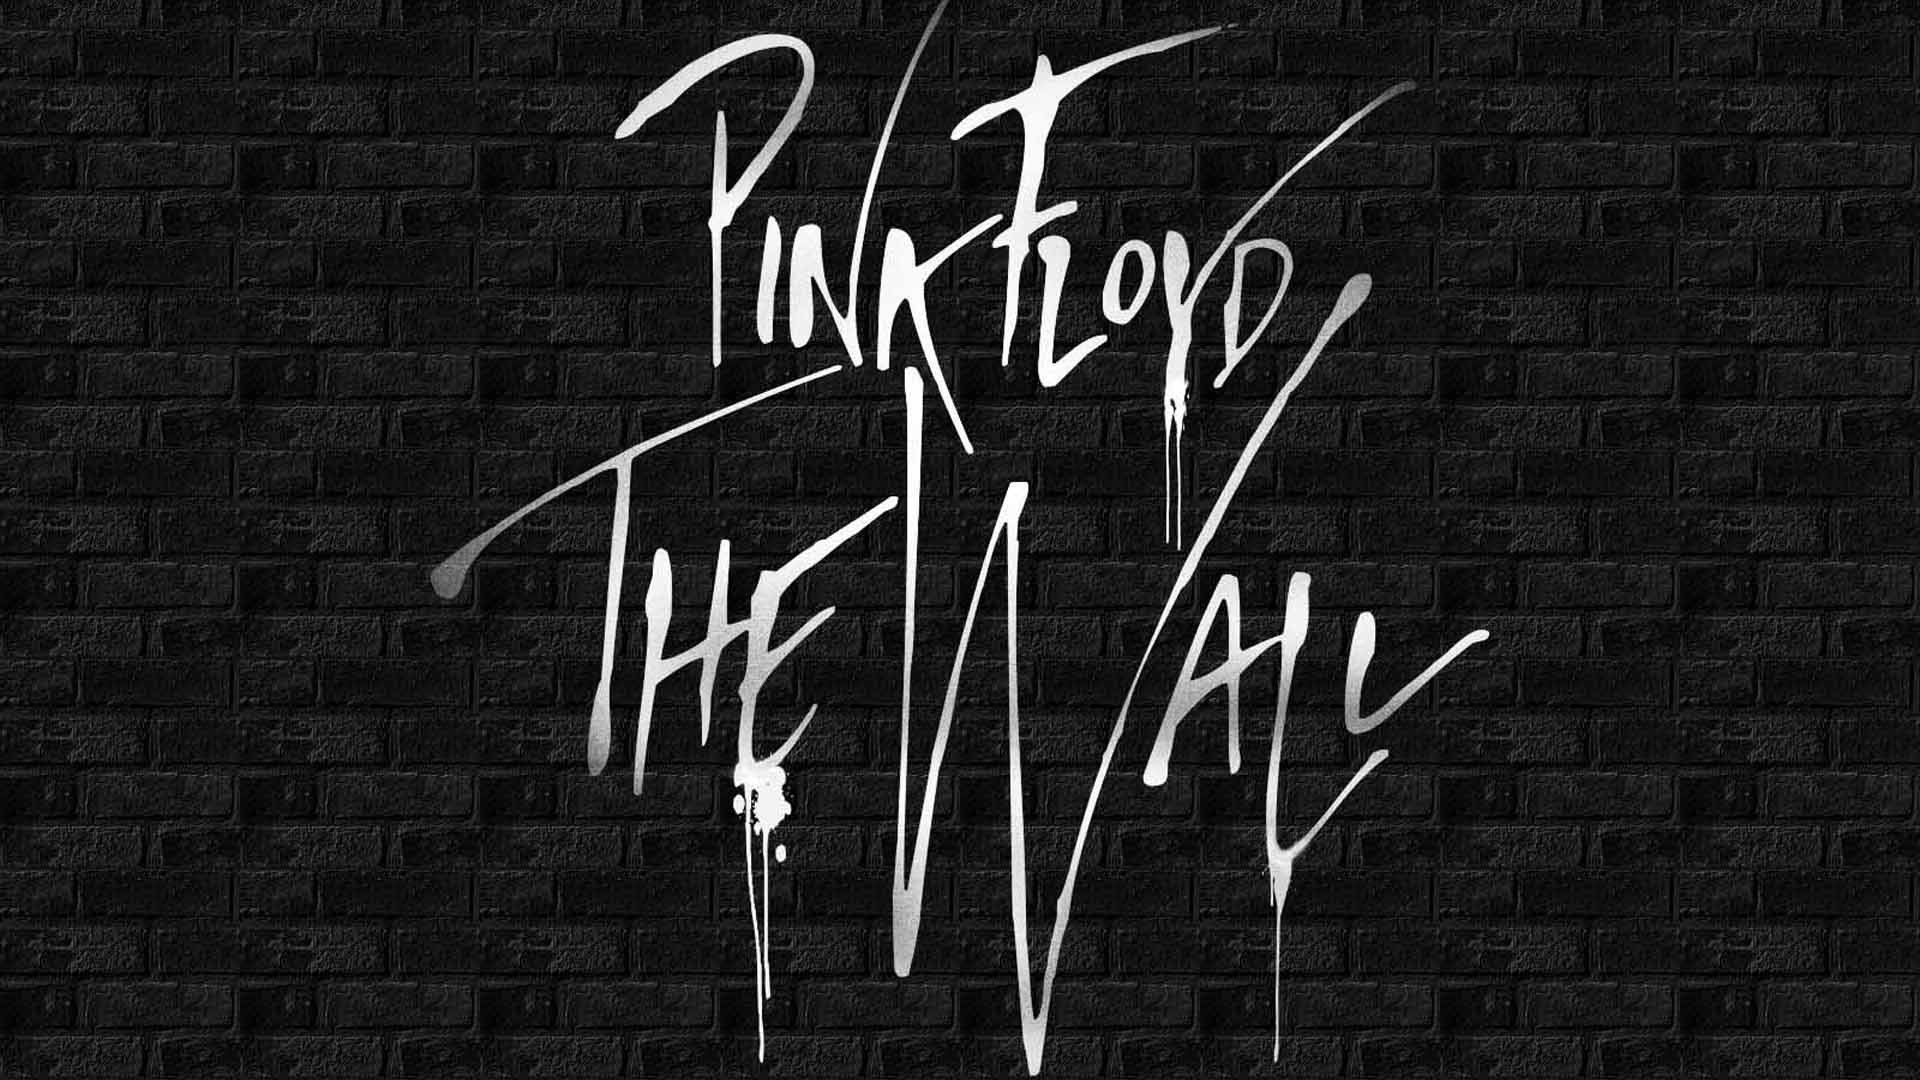 … Pink Floyd The Wall Alternative Full HD Wallpaper …